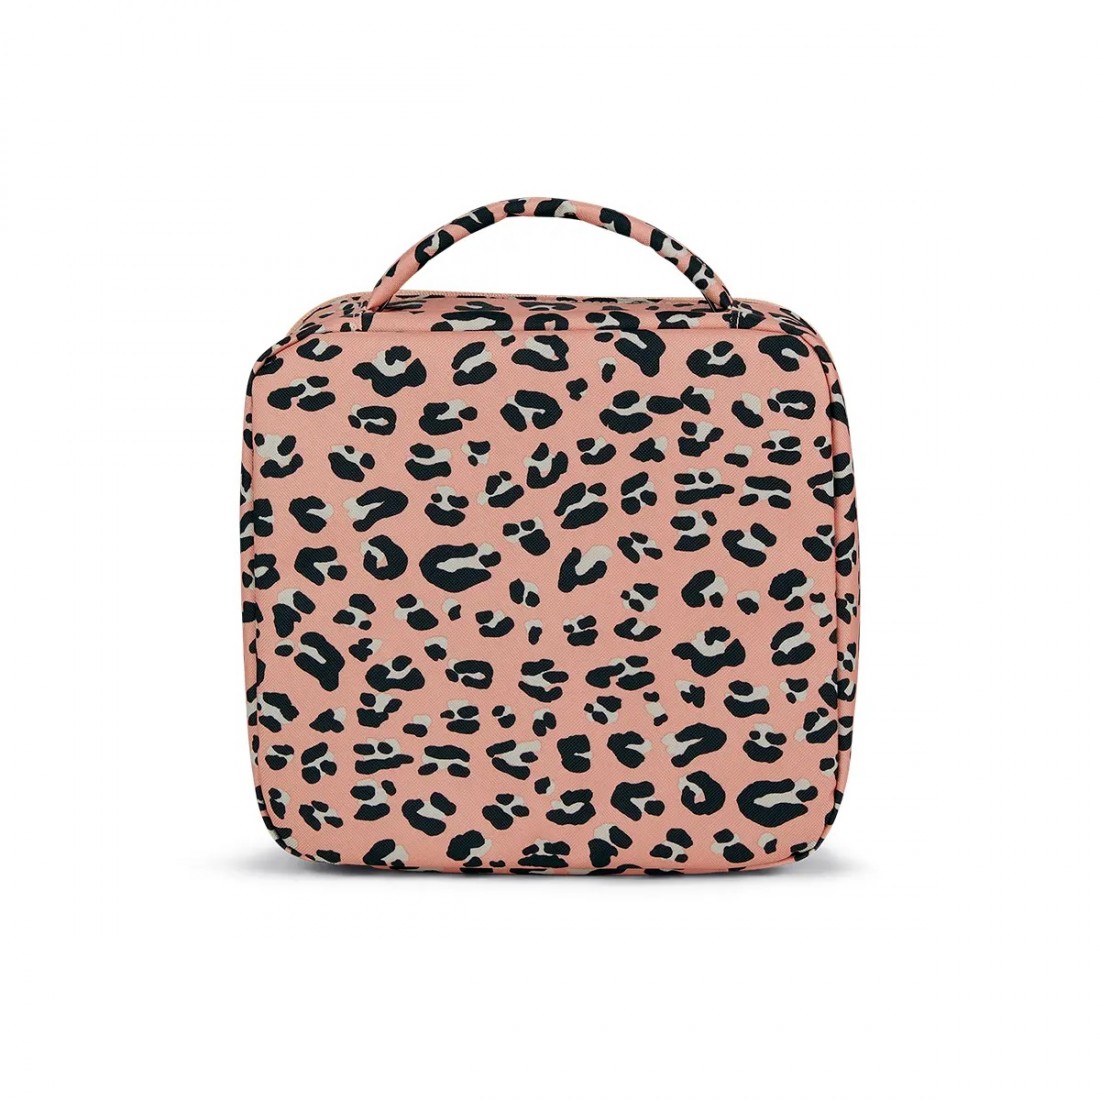 Buy Jansport Lunch Bag Pink Party Cat - Jansport, delivered to your ...